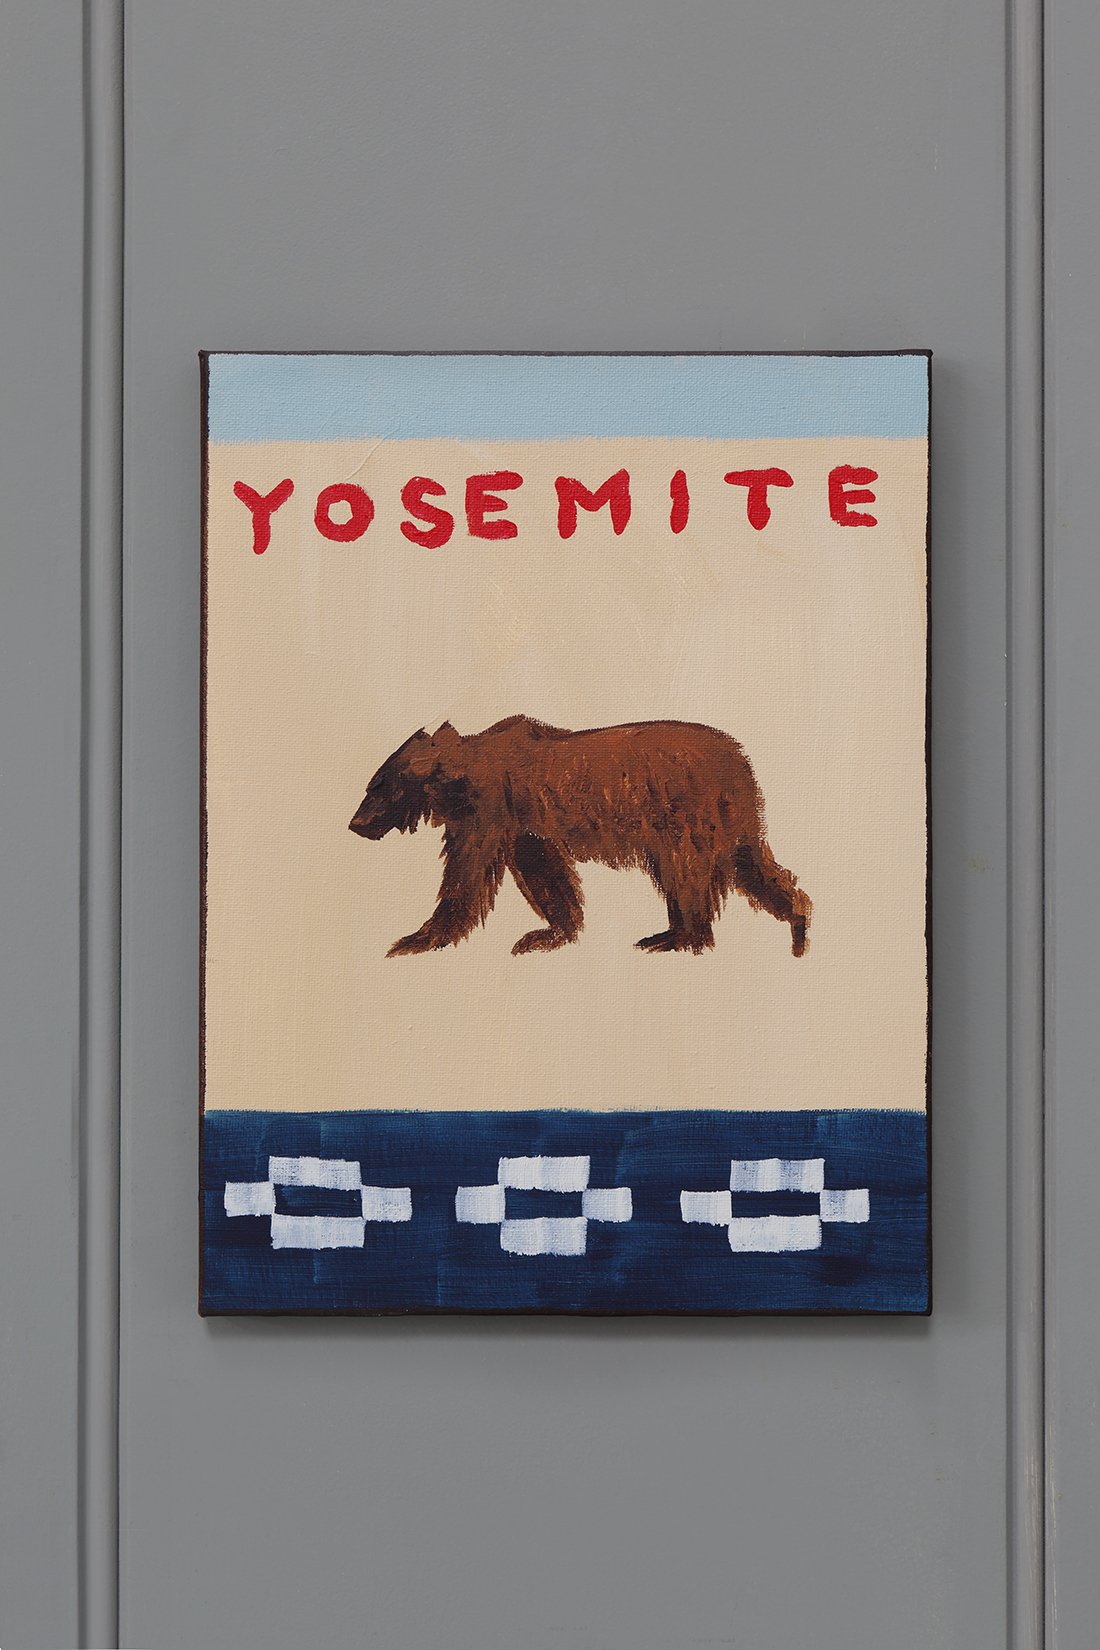 "Yosemite"